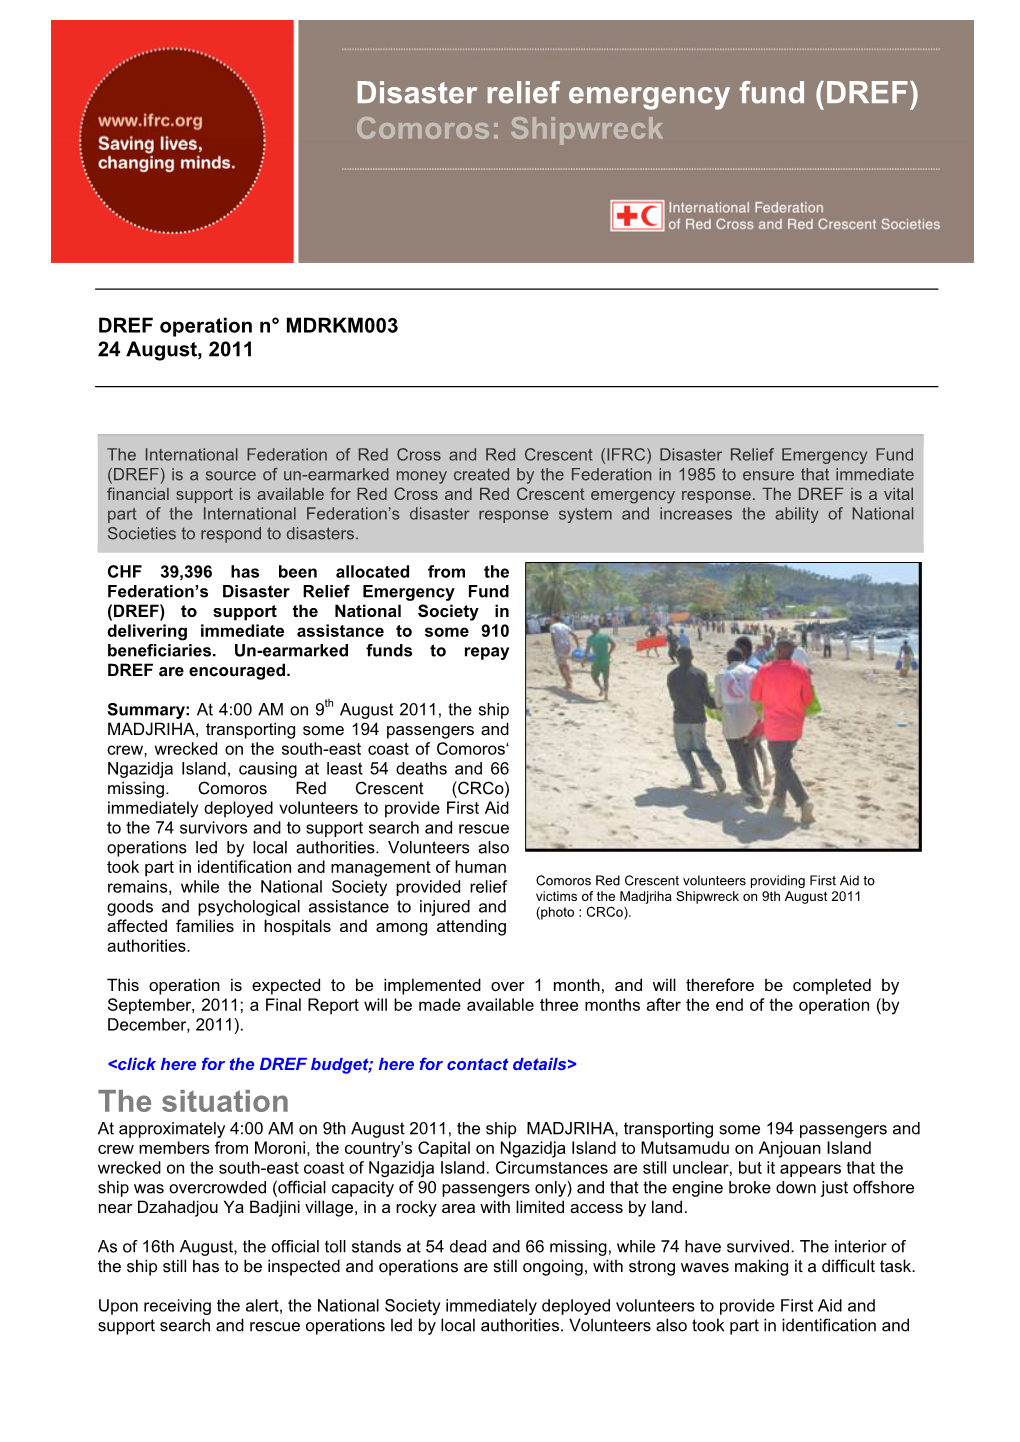 Disaster Relief Emergency Fund (DREF) Comoros: Shipwreck